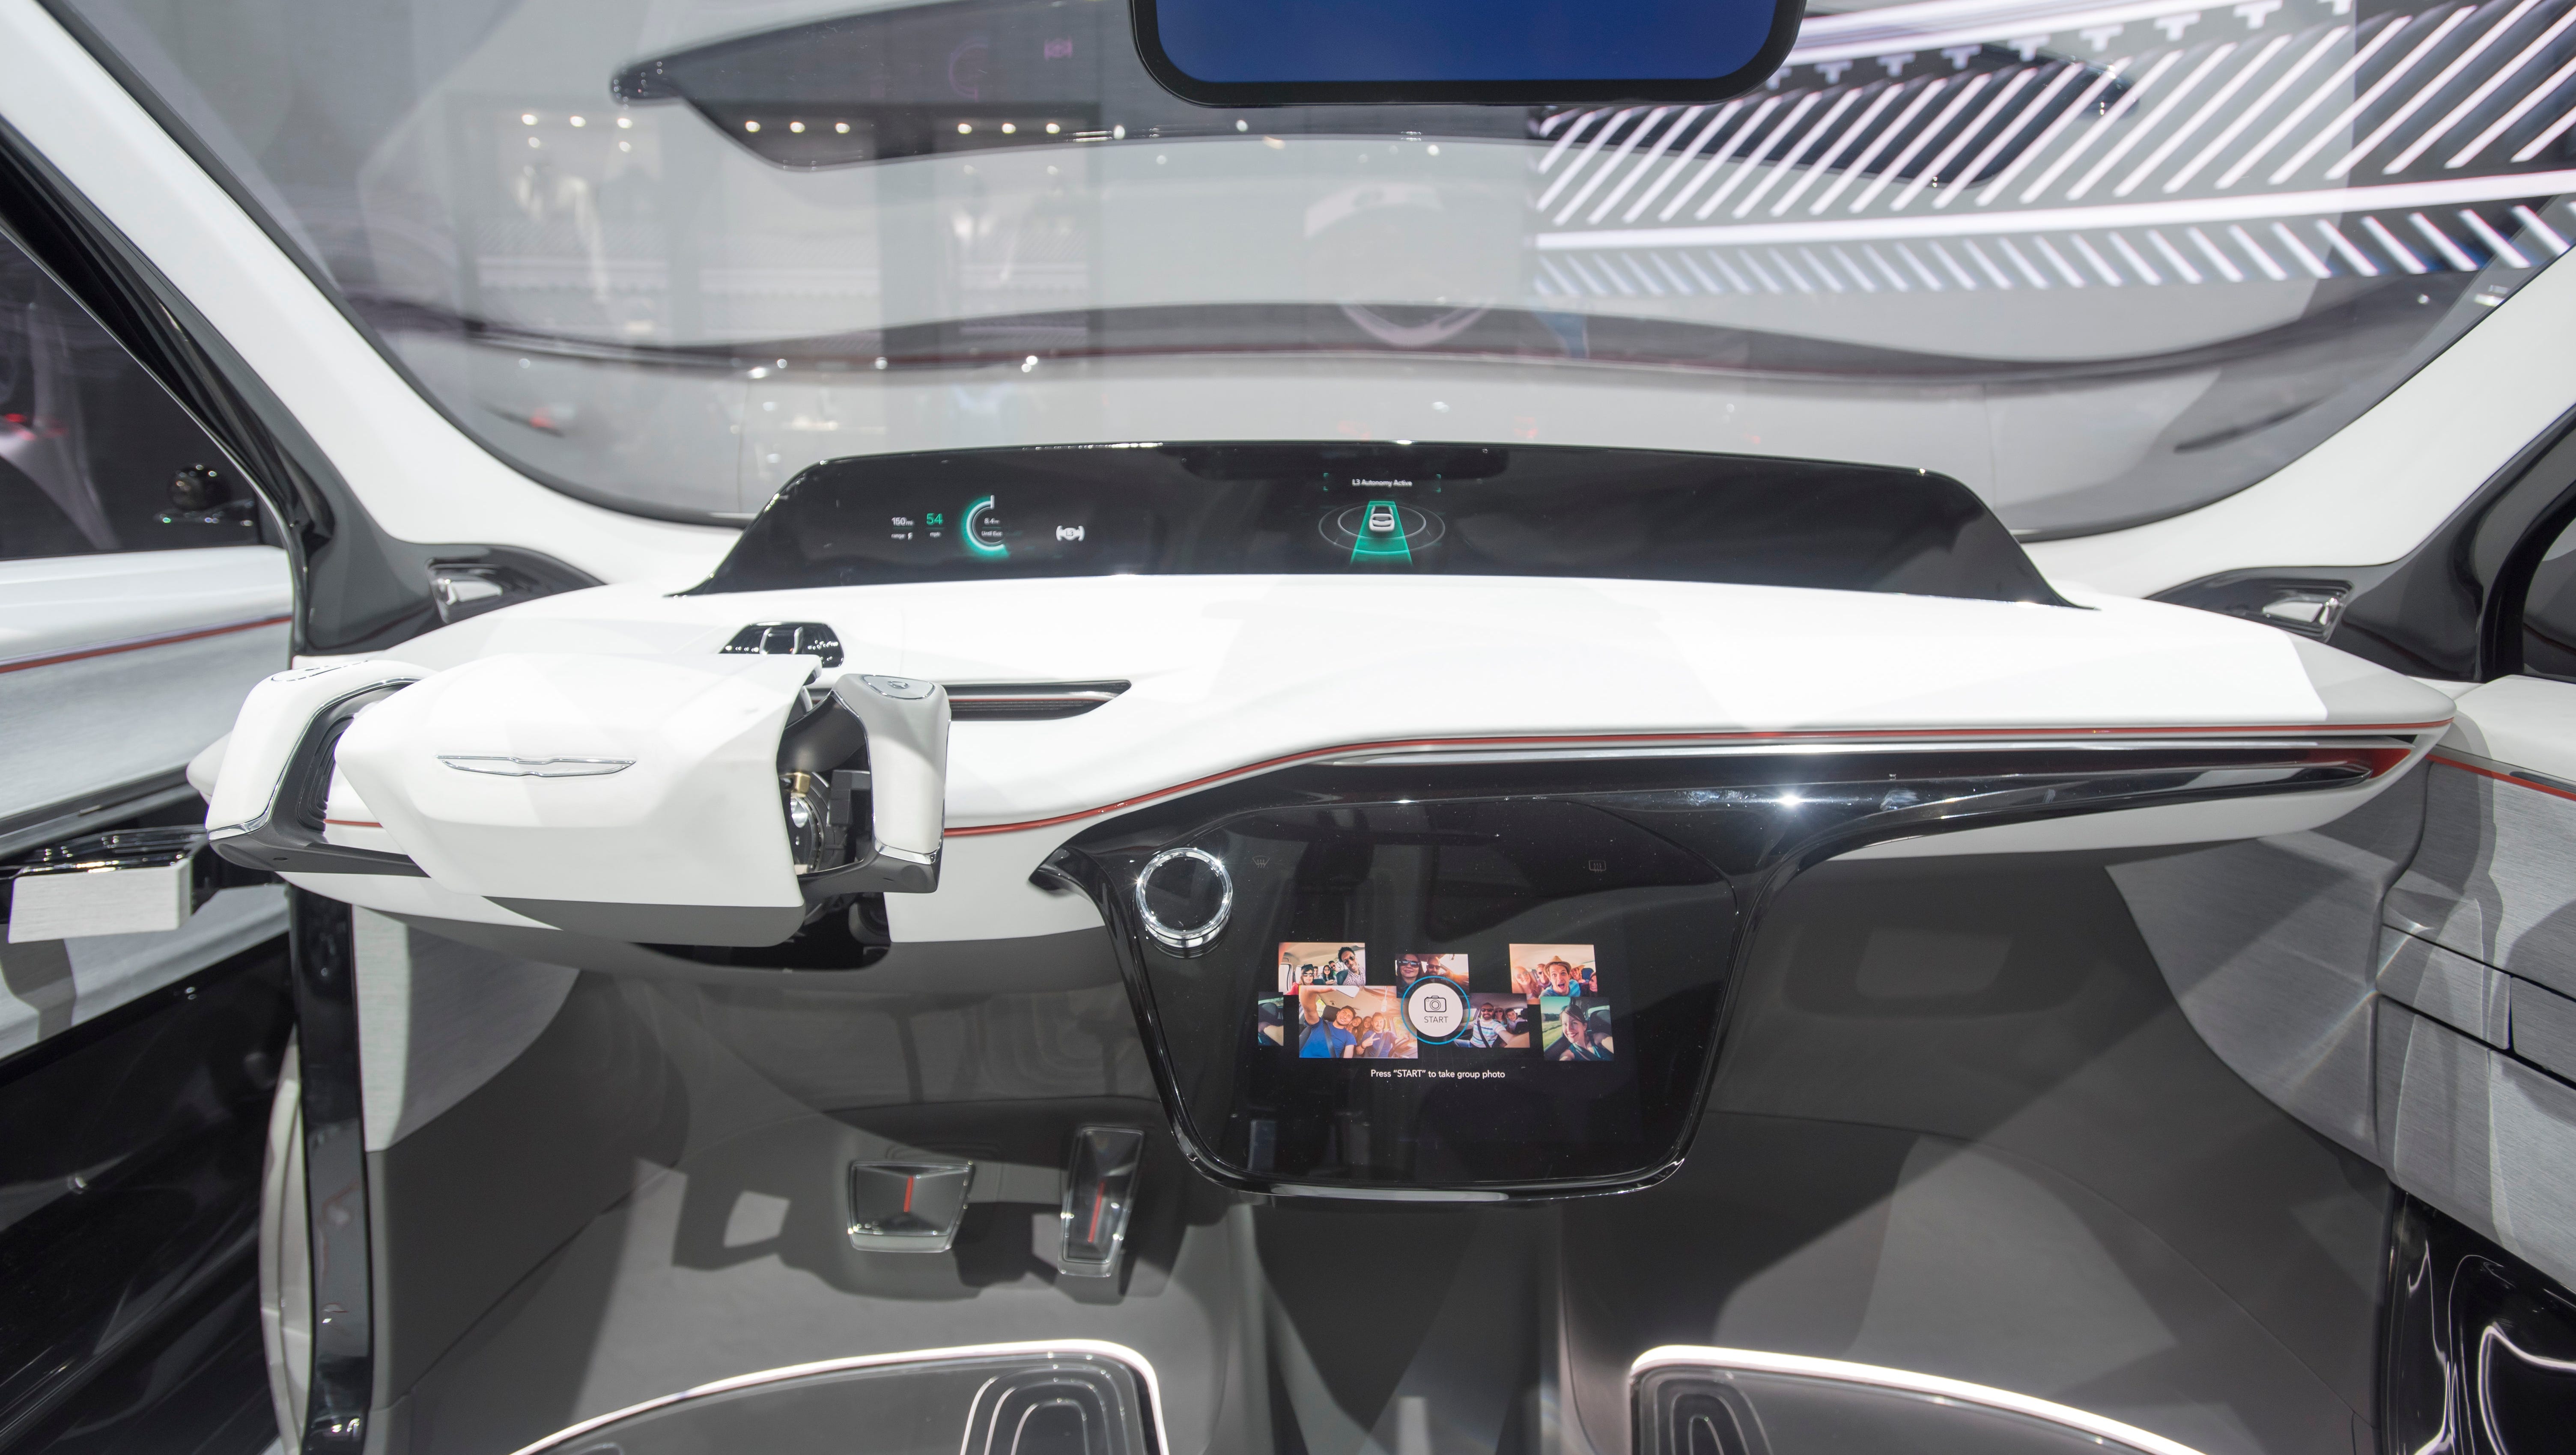 The Chrysler Portal concept enables SAE level three semi-autonomous driving modes.